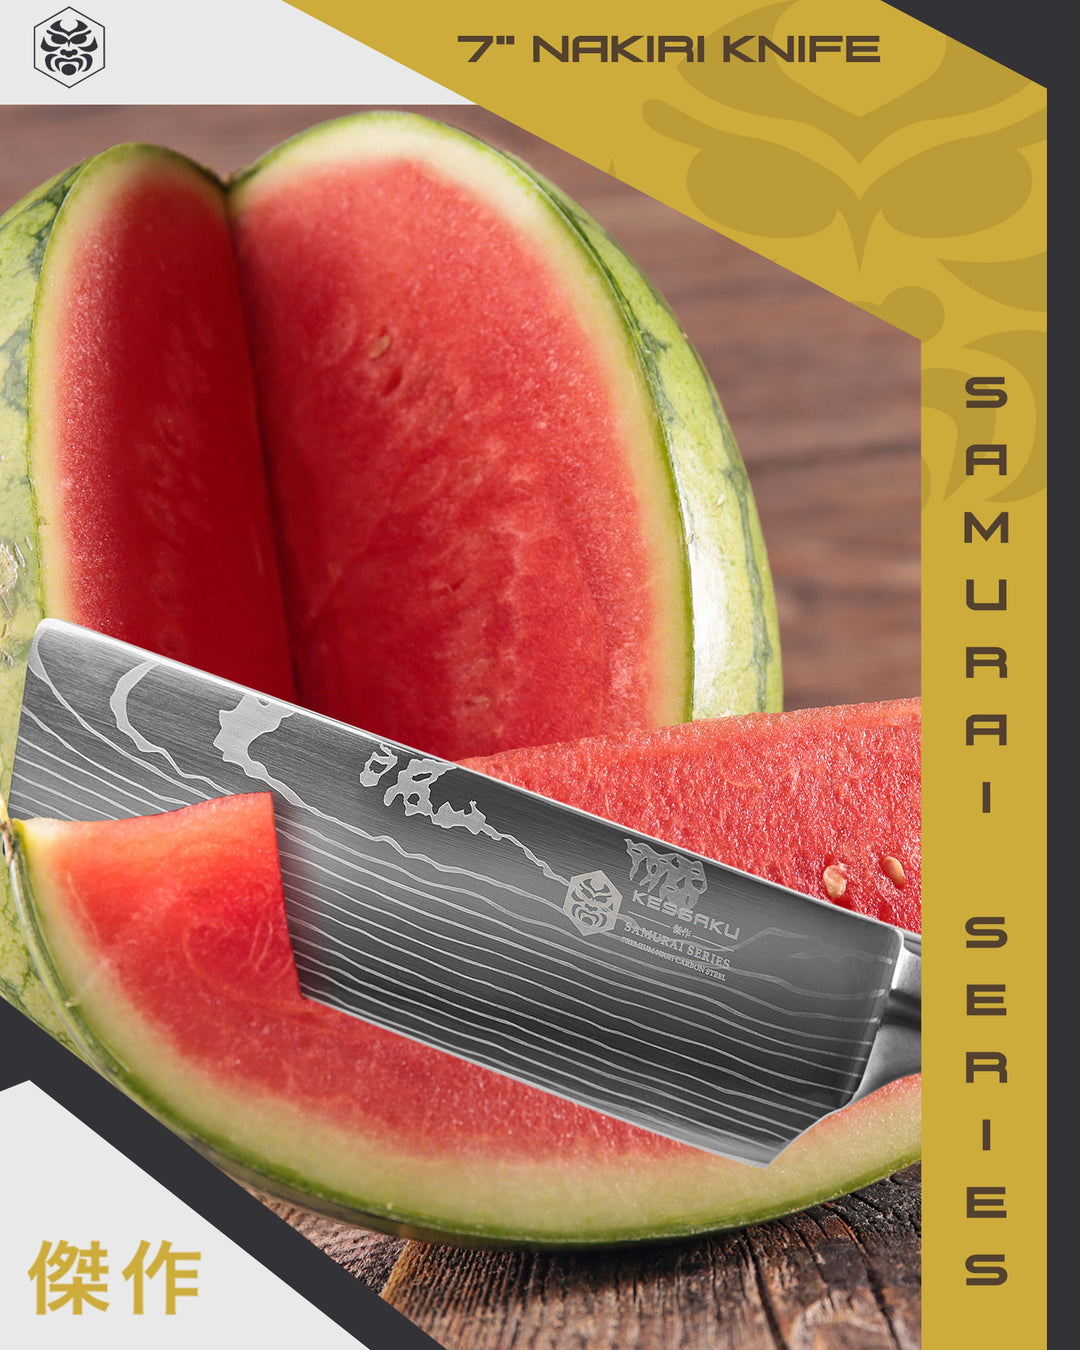 The Samurai Nakiri with large, cut watermelon